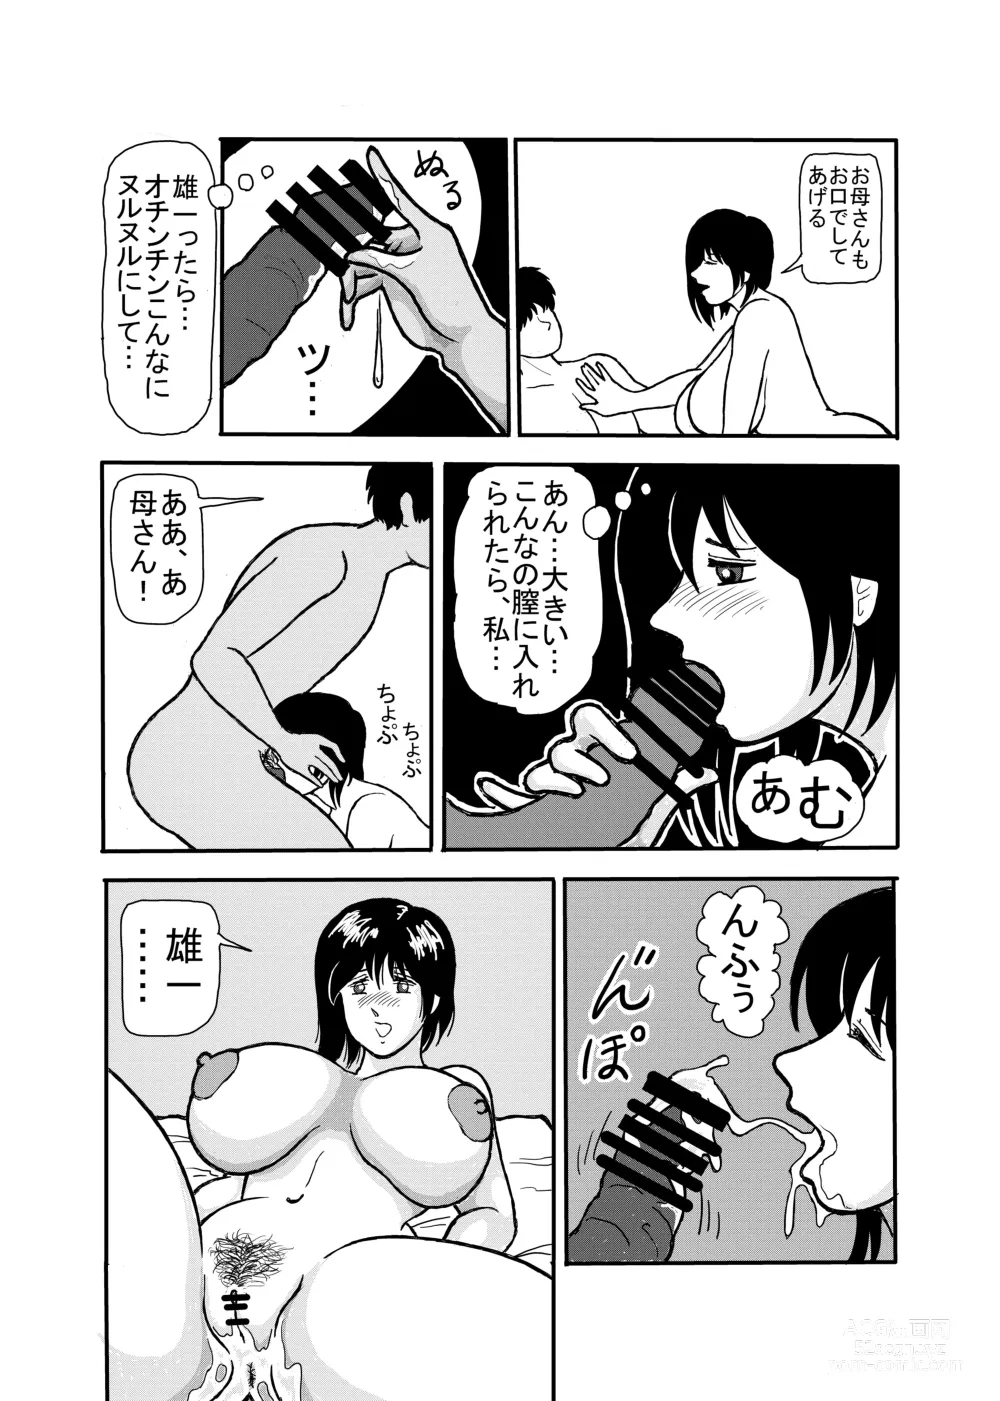 Page 25 of doujinshi 息子と二人きりで暮らすことになりました―初めての膣内射精―